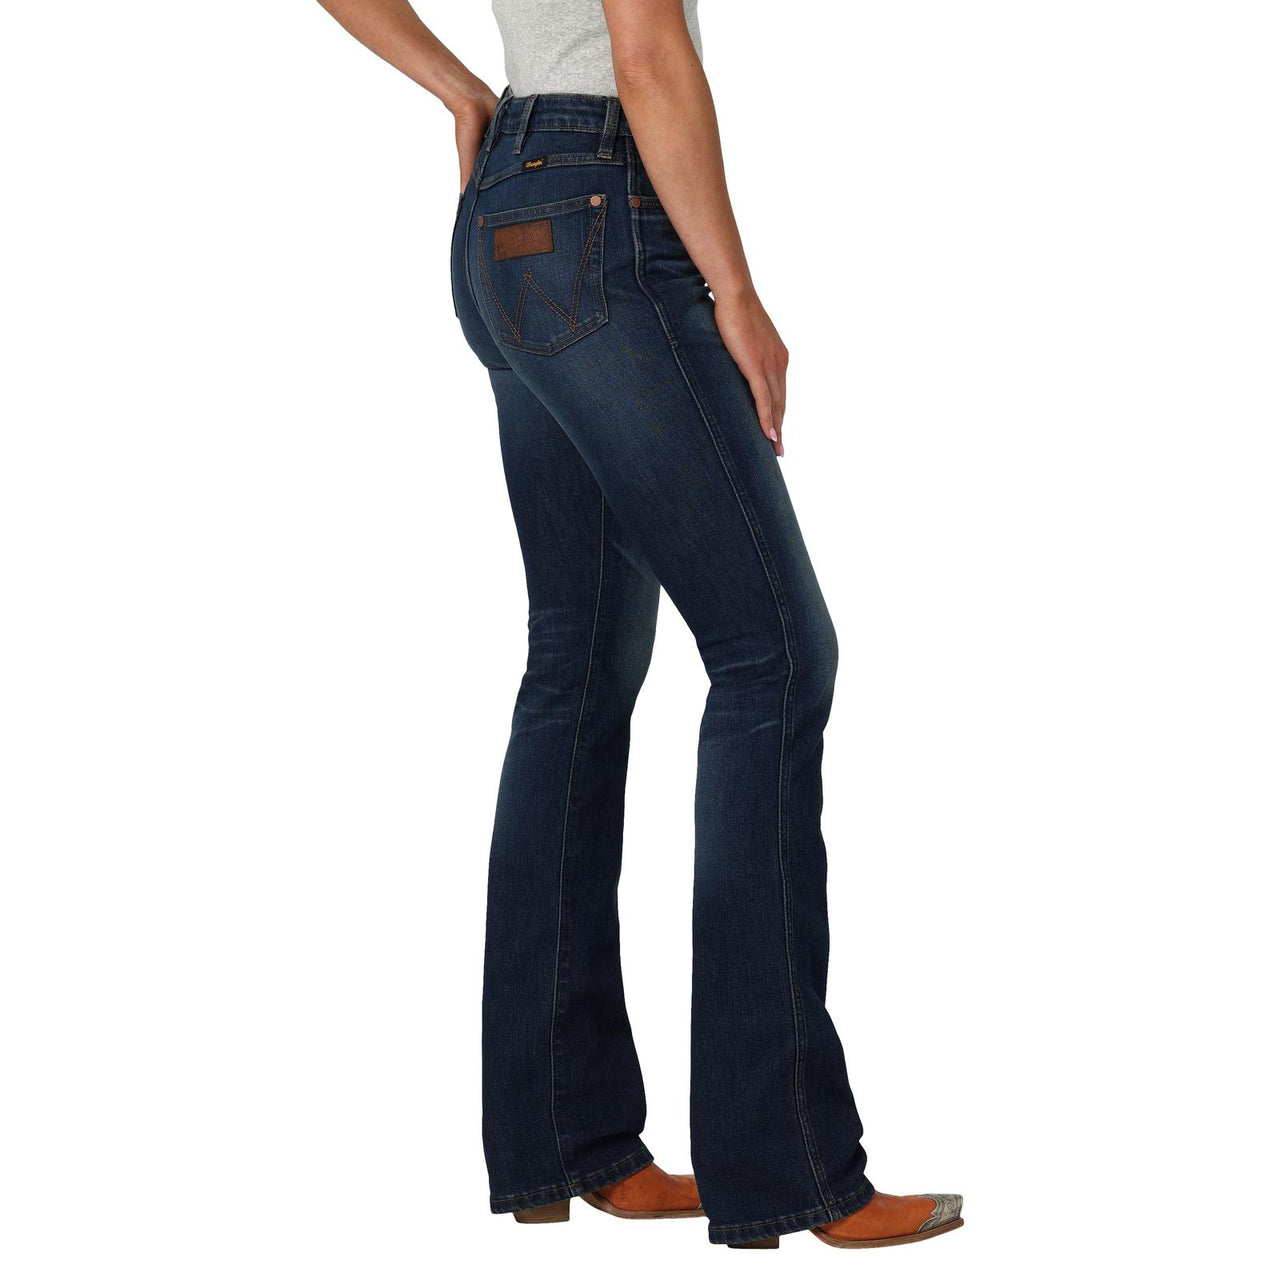 Wrangler Women's Retro Premium Slim Boot Green Jeans - Avery